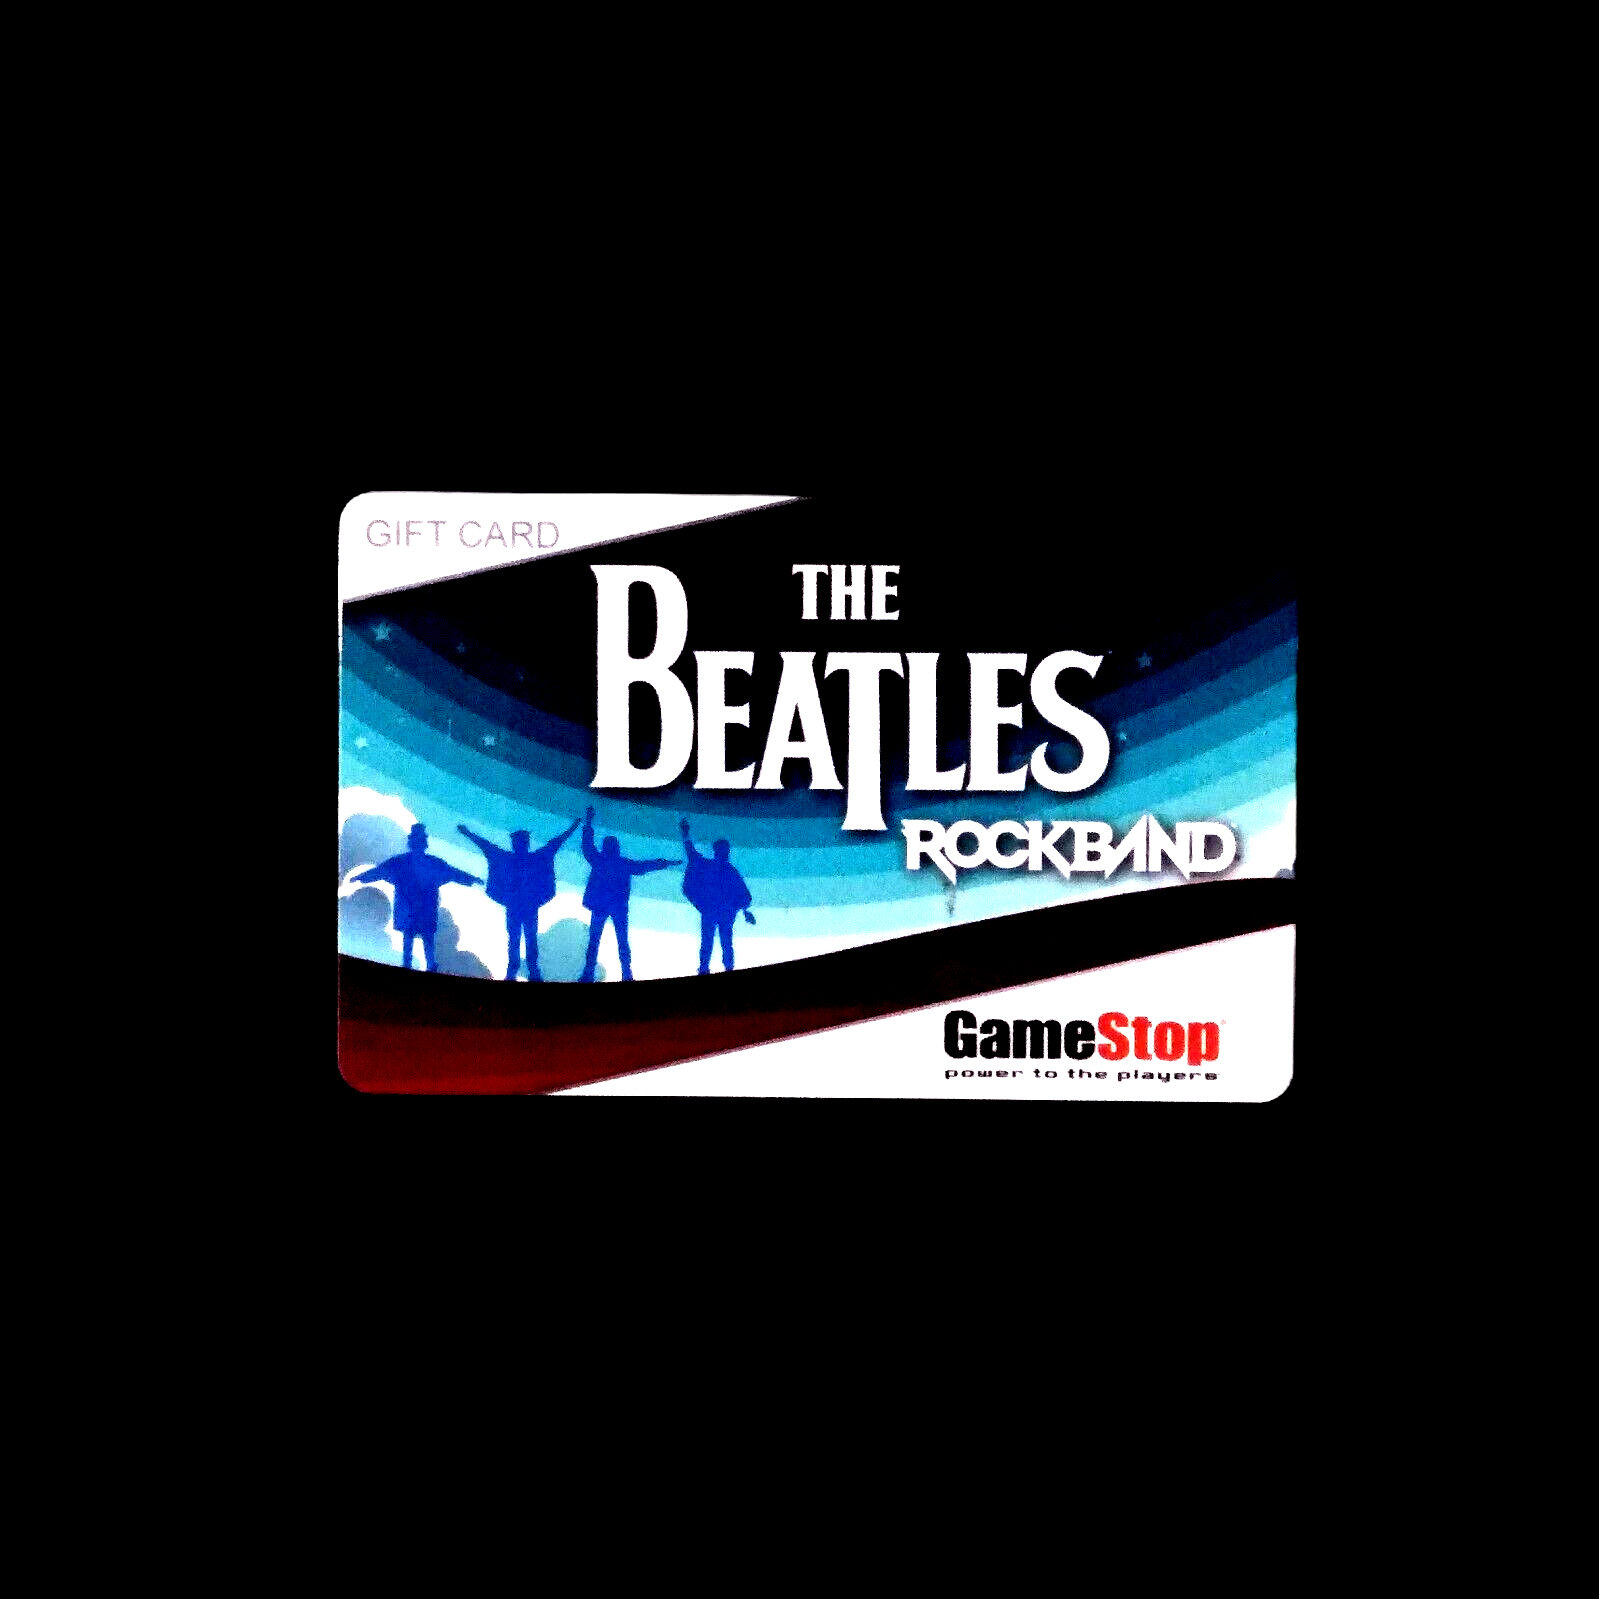 Gamestop The Beatles Rock band COLLECTIBLE GIFT CARD $0 #6364